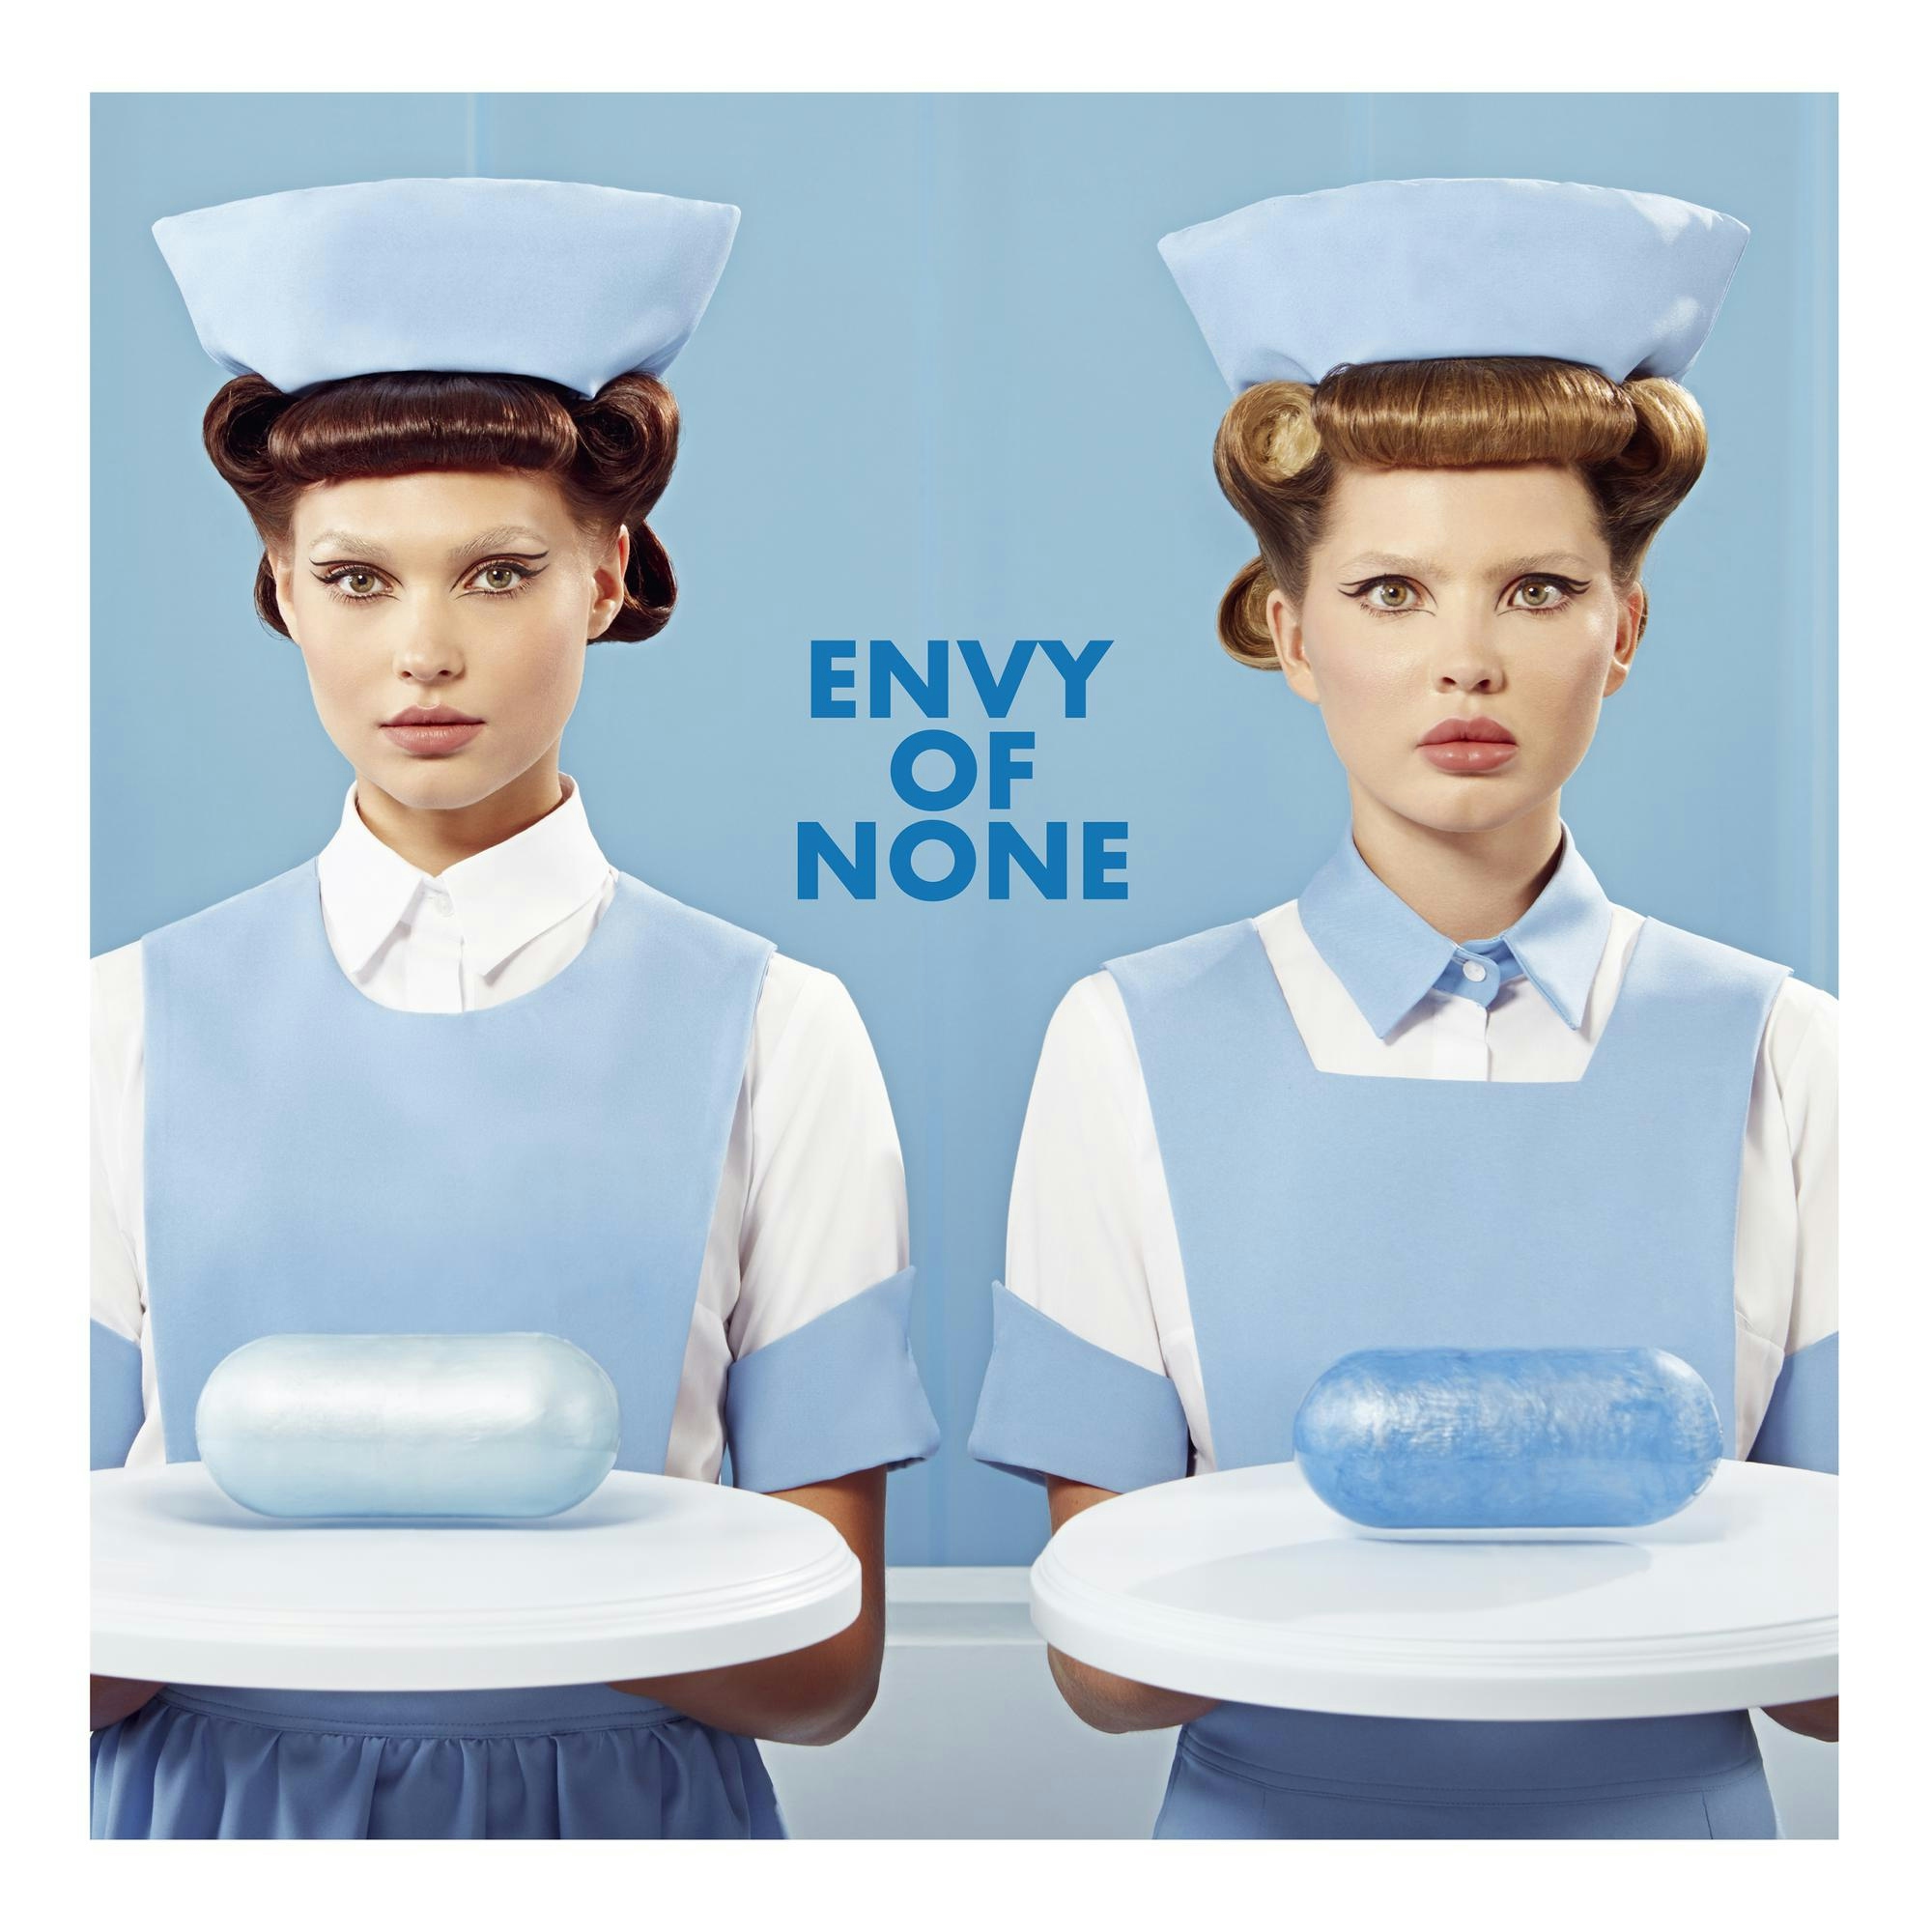 Album artwork for Album artwork for Envy Of None by Envy of None by Envy Of None - Envy of None